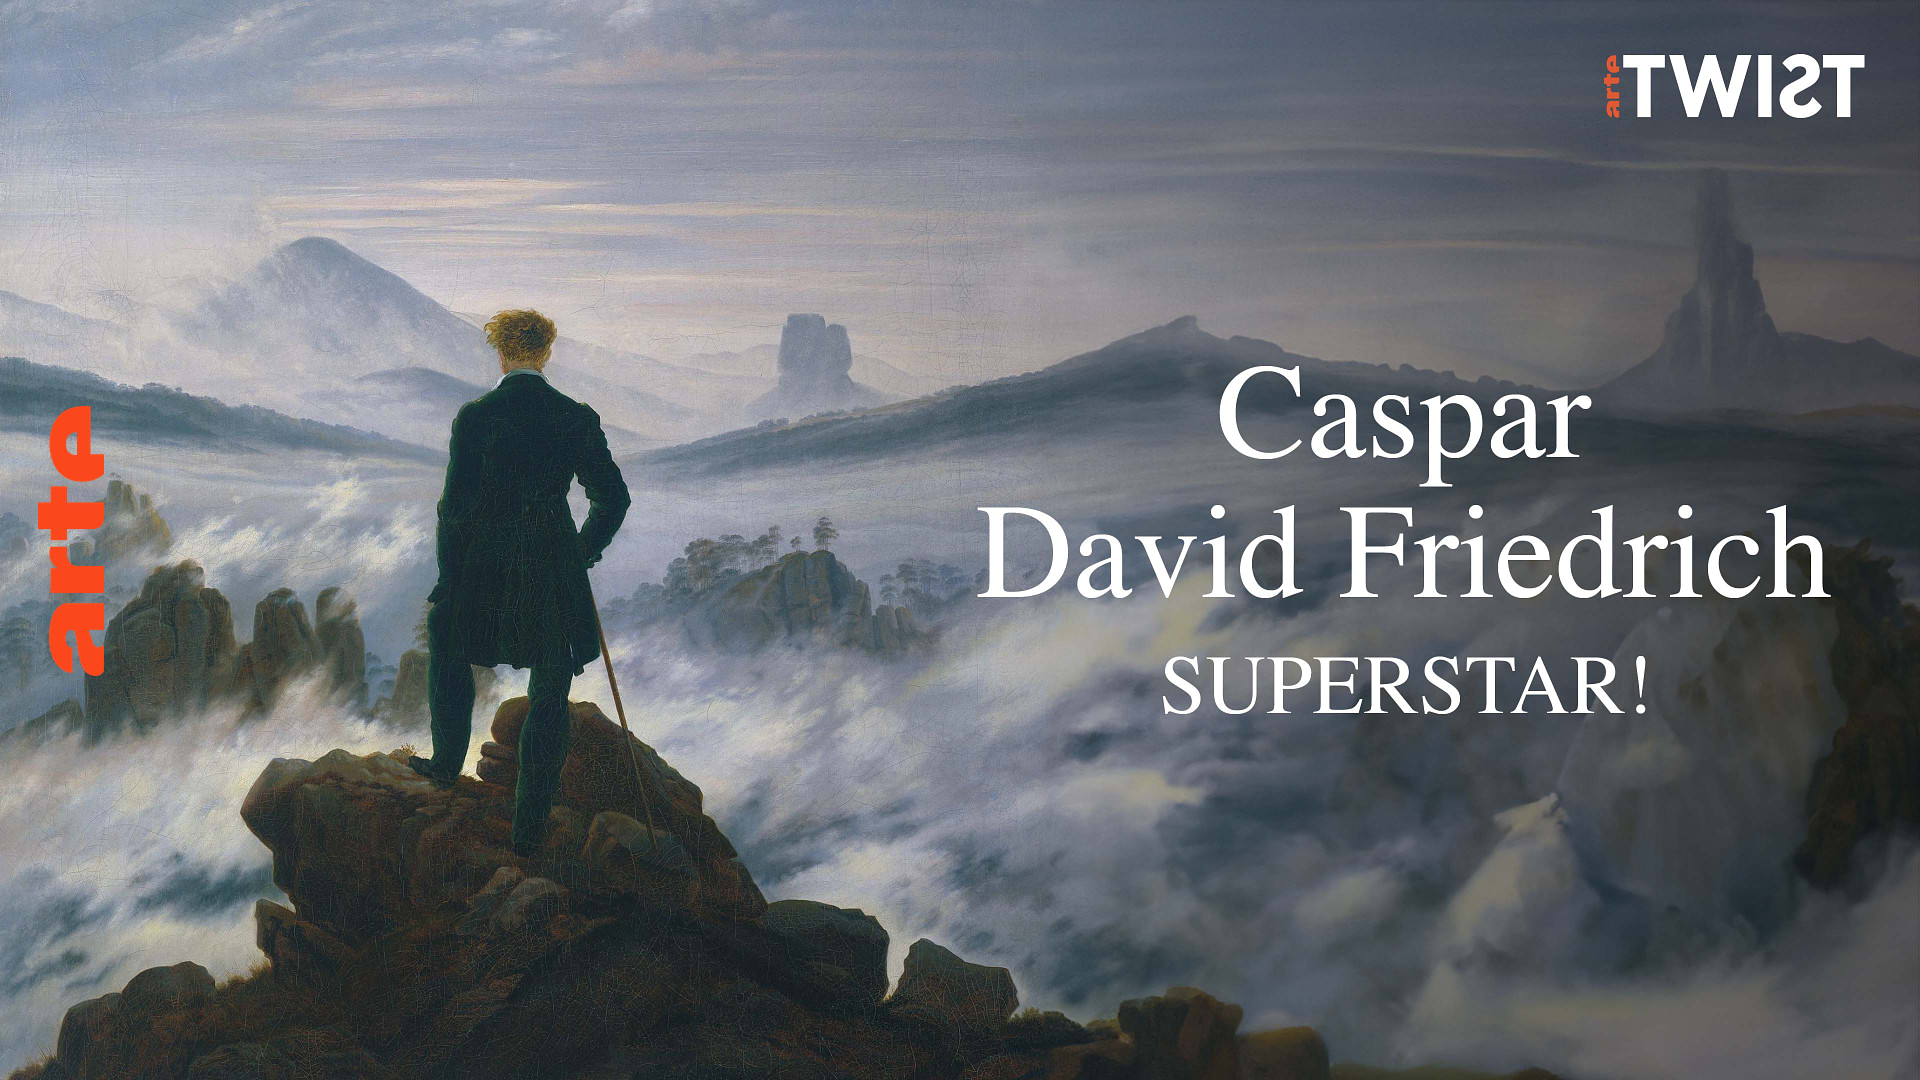 Caspar David Friedrich Superstar!